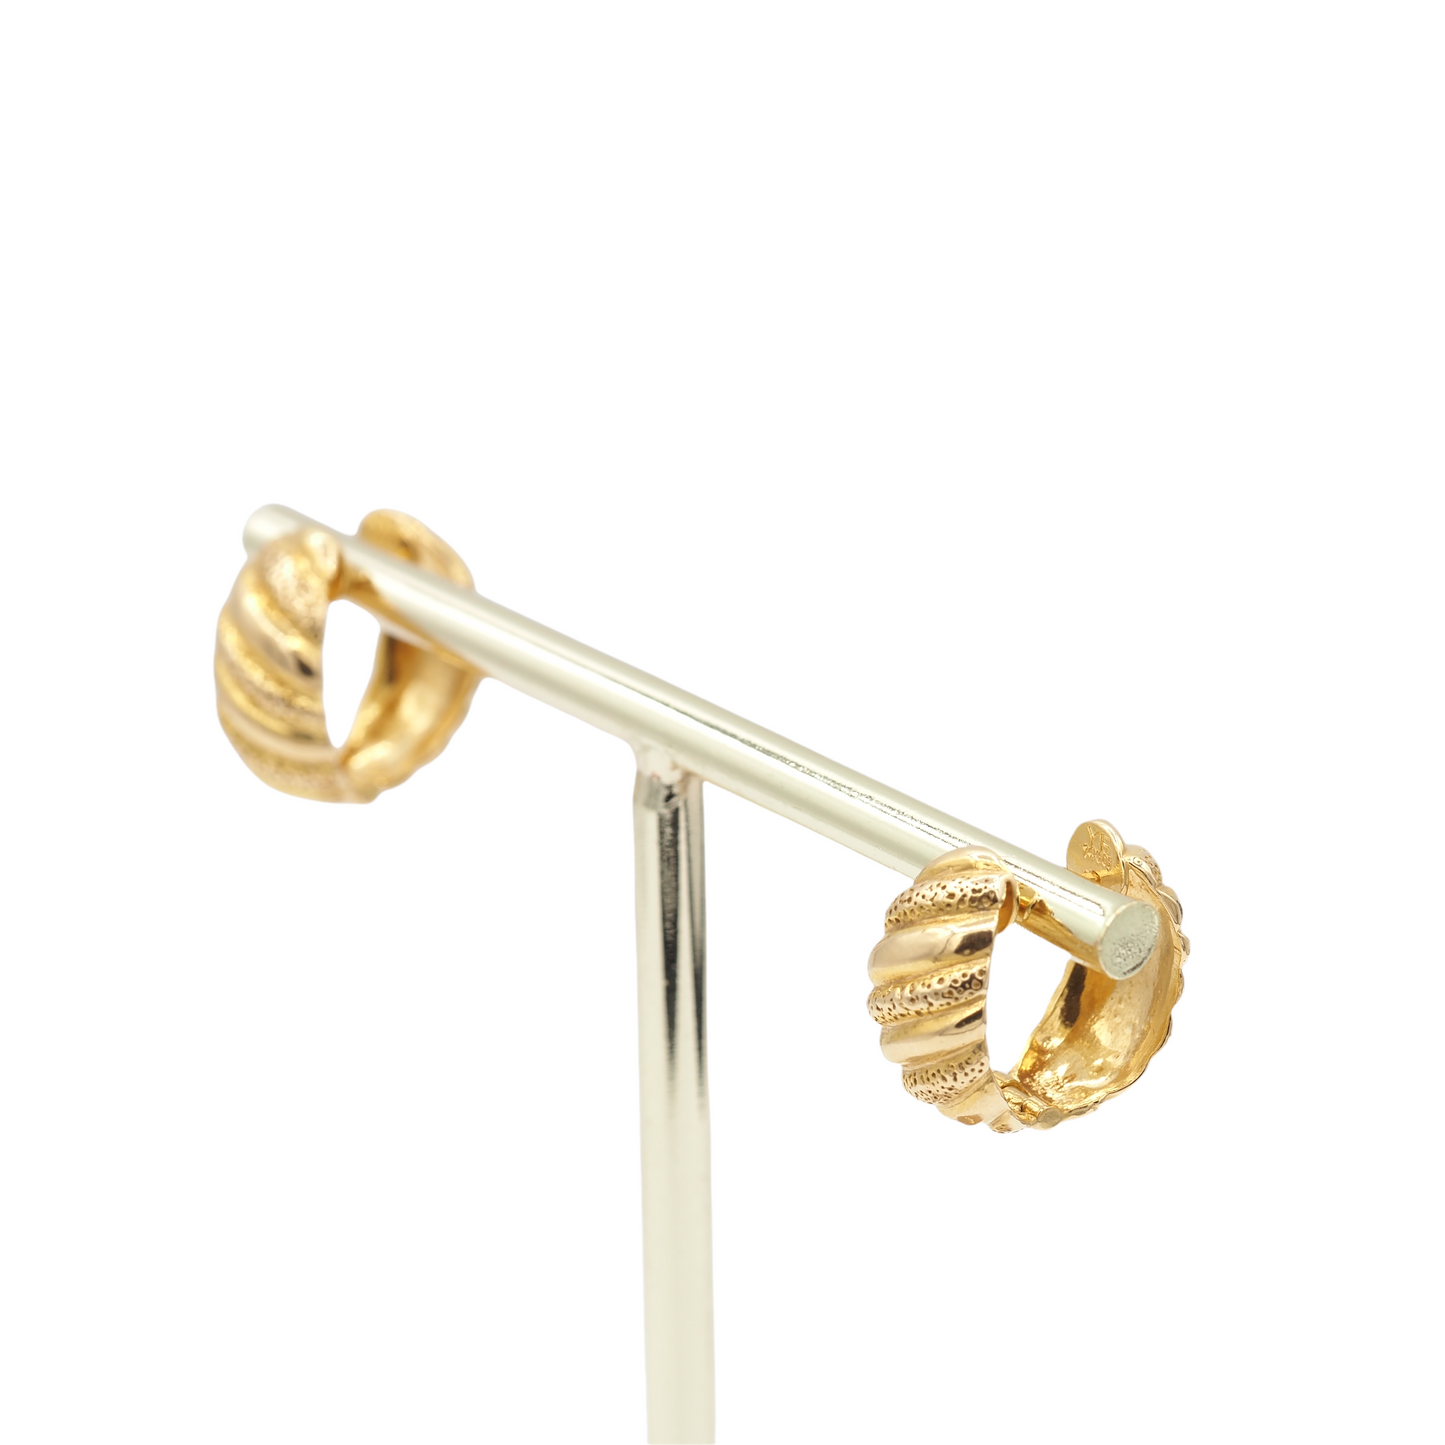 Minimalistic earrings - La Trouvaille